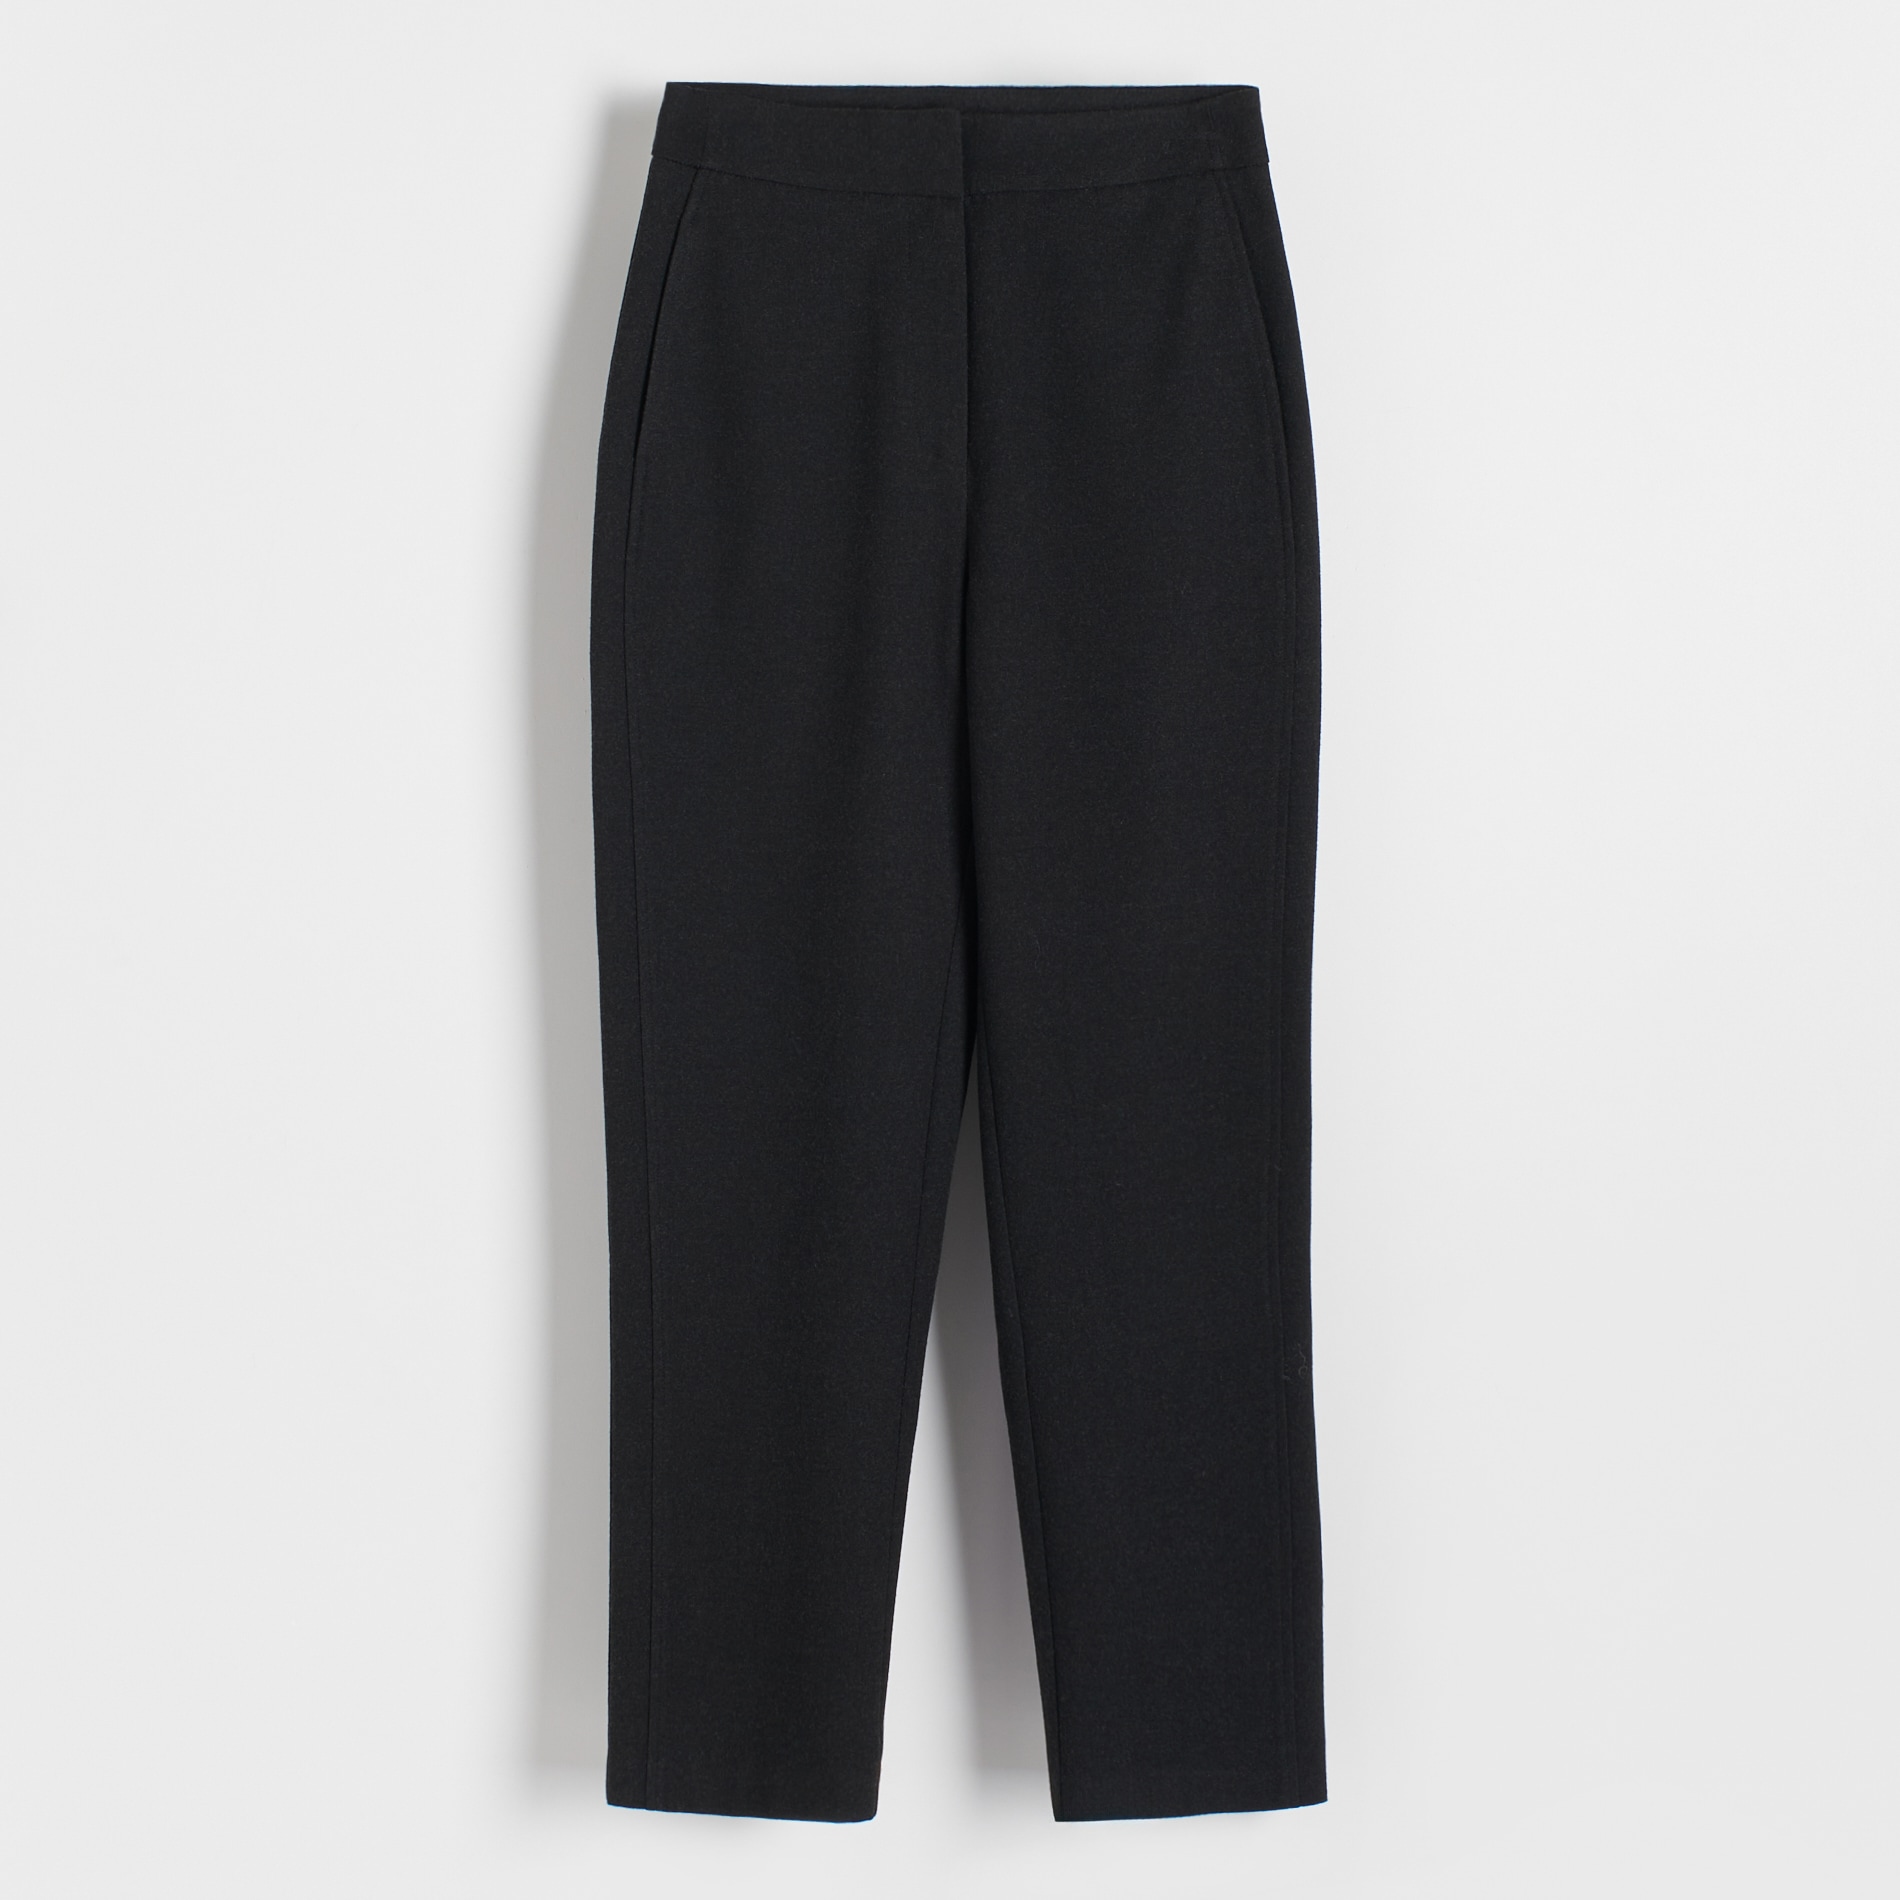 Reserved - Spodnie z melanżowej tkaniny - Czarny